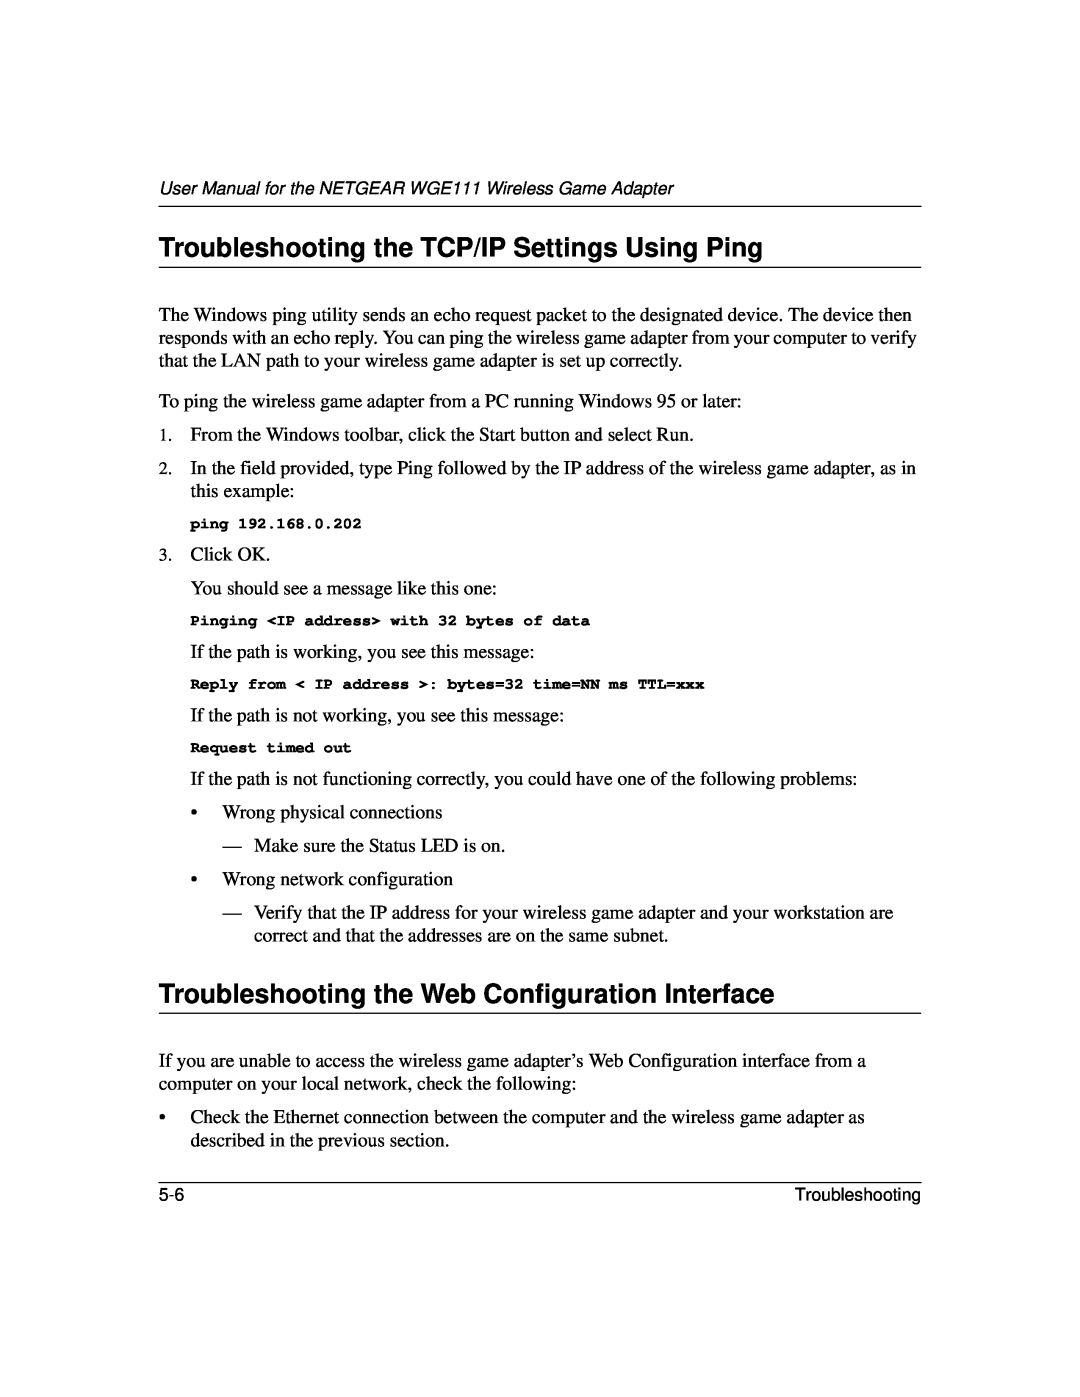 NETGEAR WGE111 user manual Troubleshooting the TCP/IP Settings Using Ping, Troubleshooting the Web Configuration Interface 